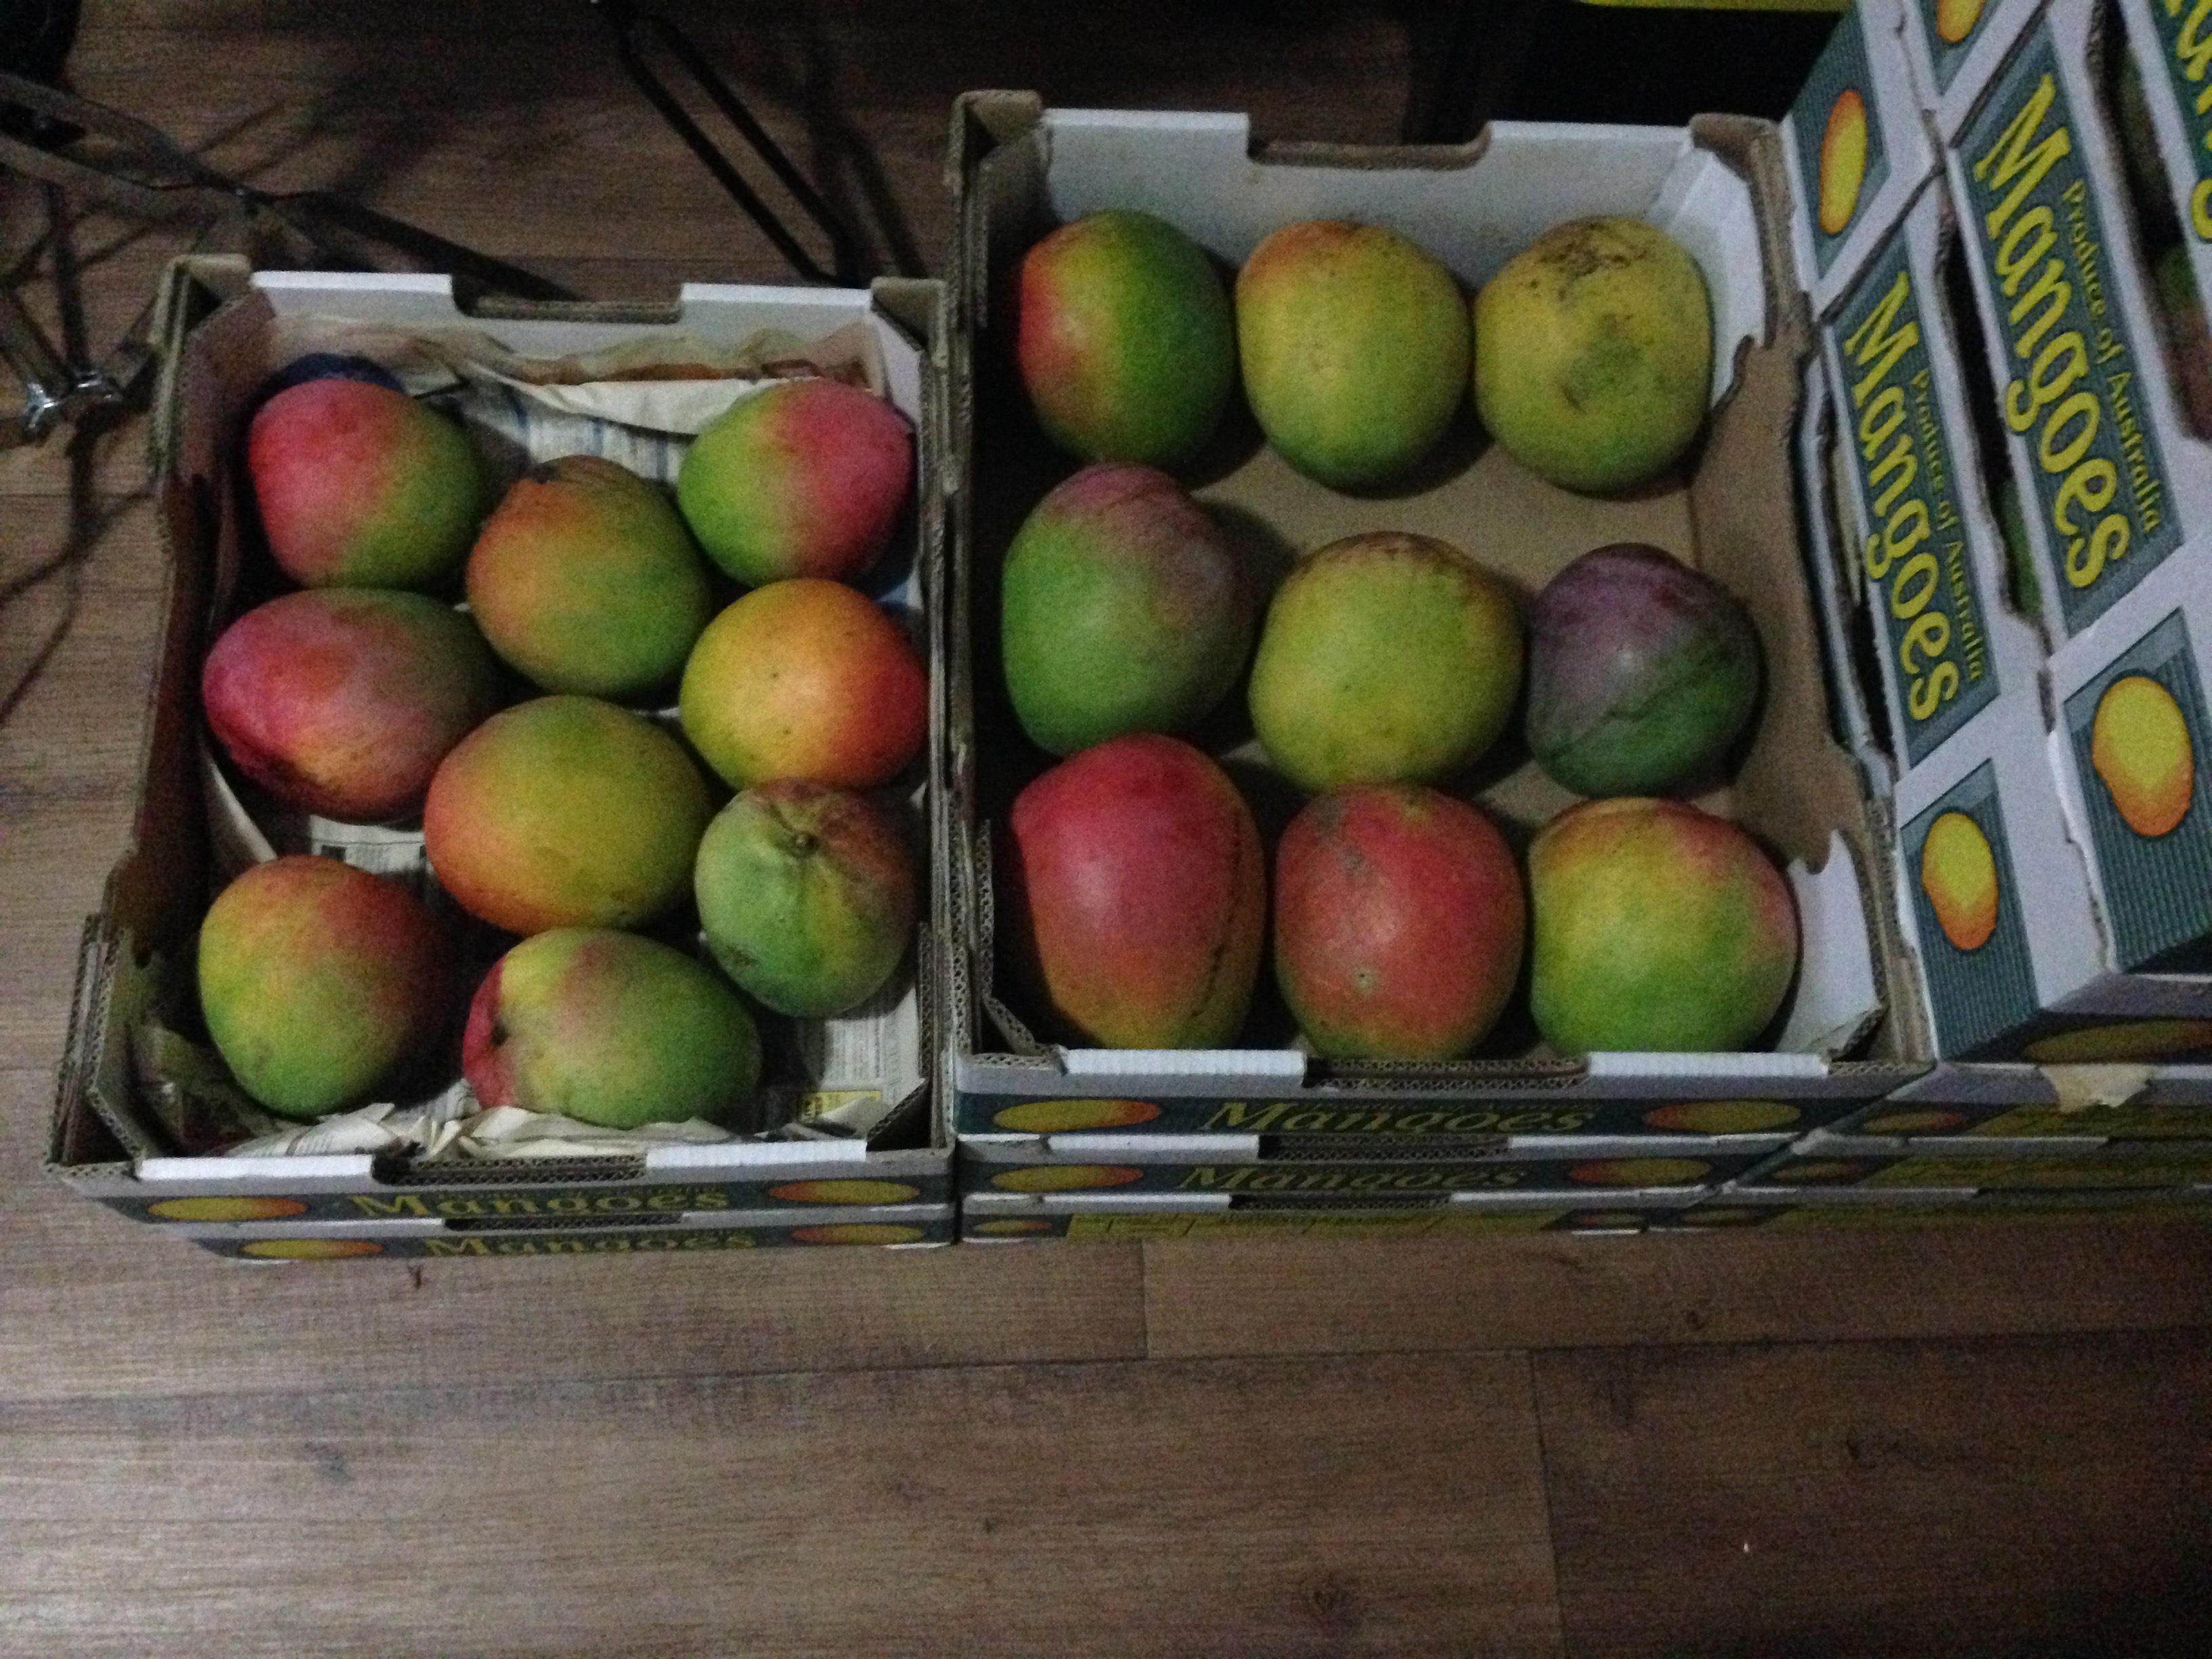 Bundy Special mangoes